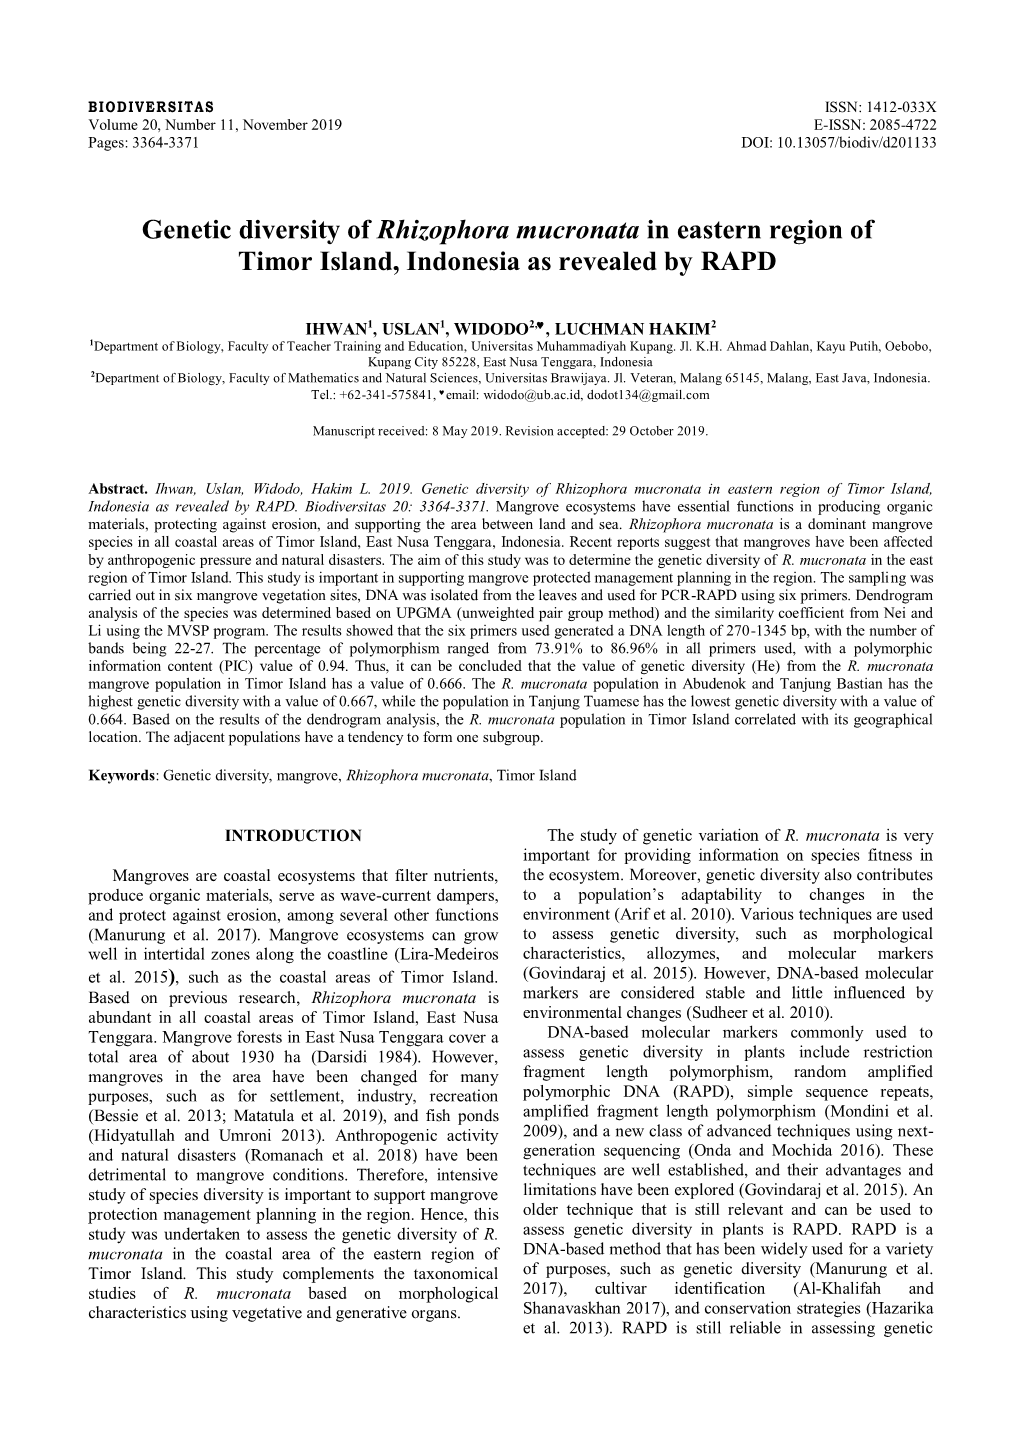 Genetic Diversity of Rhizophora Mucronata in Eastern Region of Timor Island, Indonesia As Revealed by RAPD